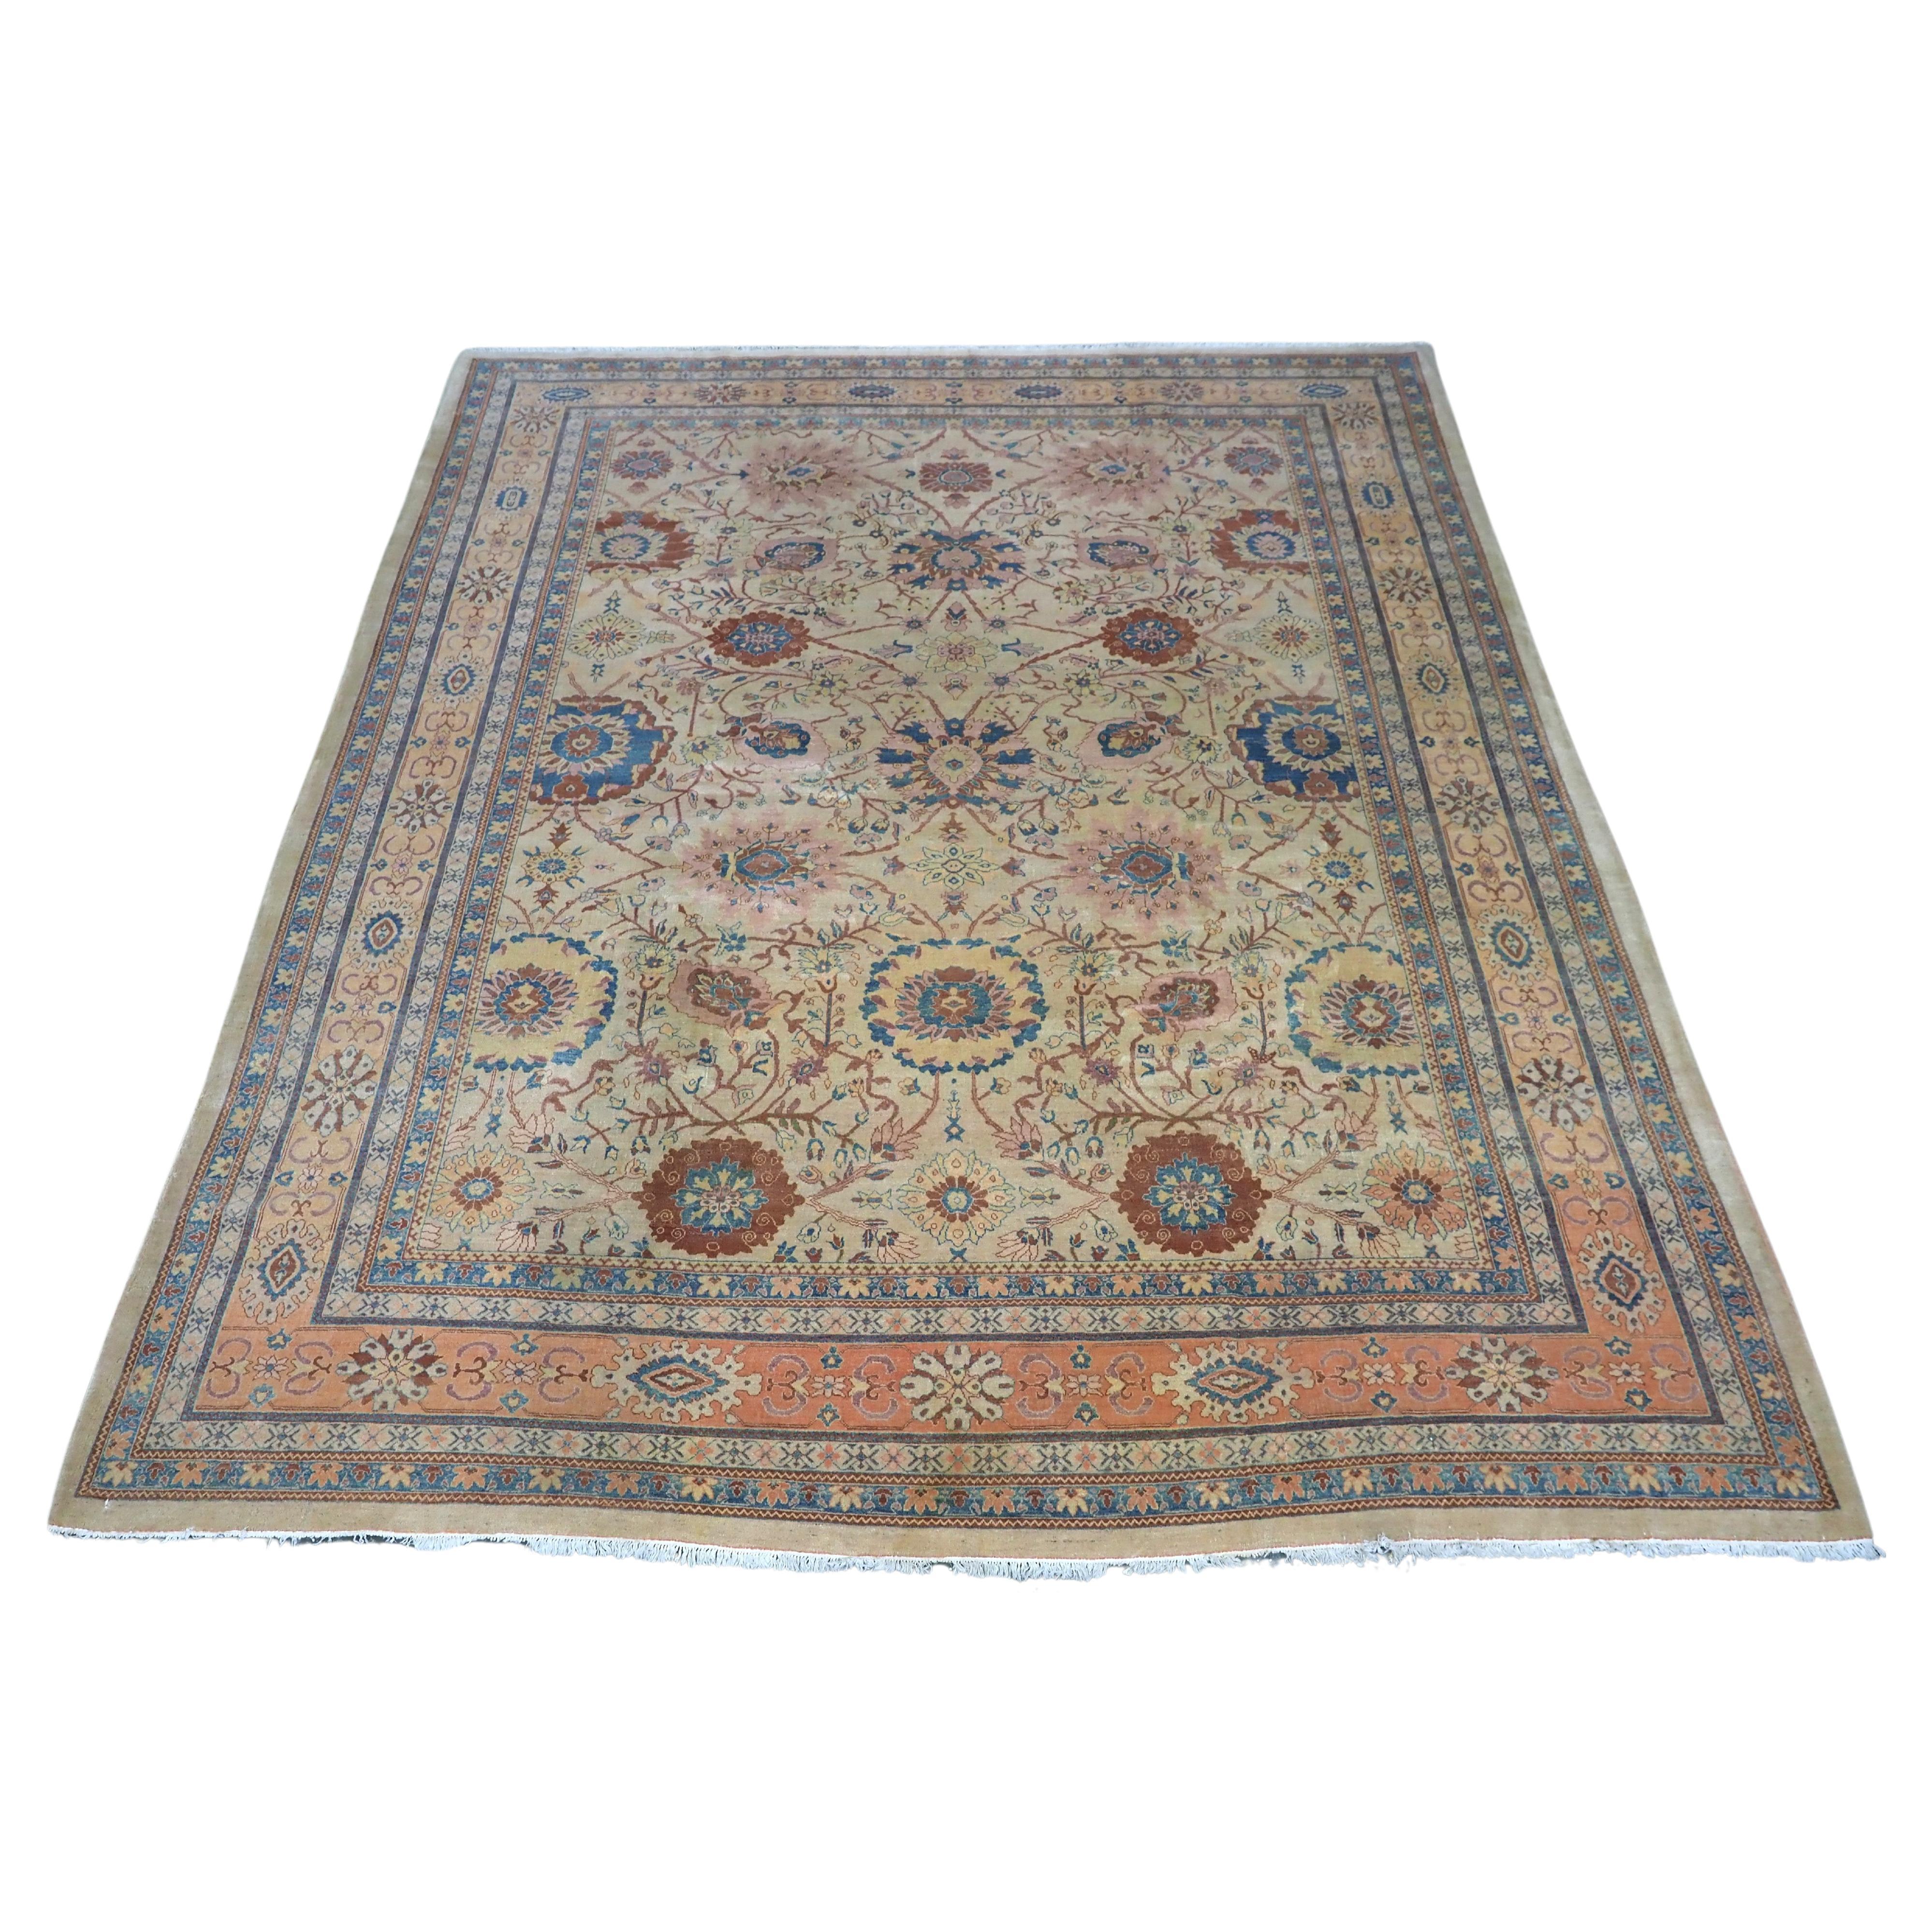 An excellent example of a vintage Ziegler design carpet in a soft colour palette For Sale